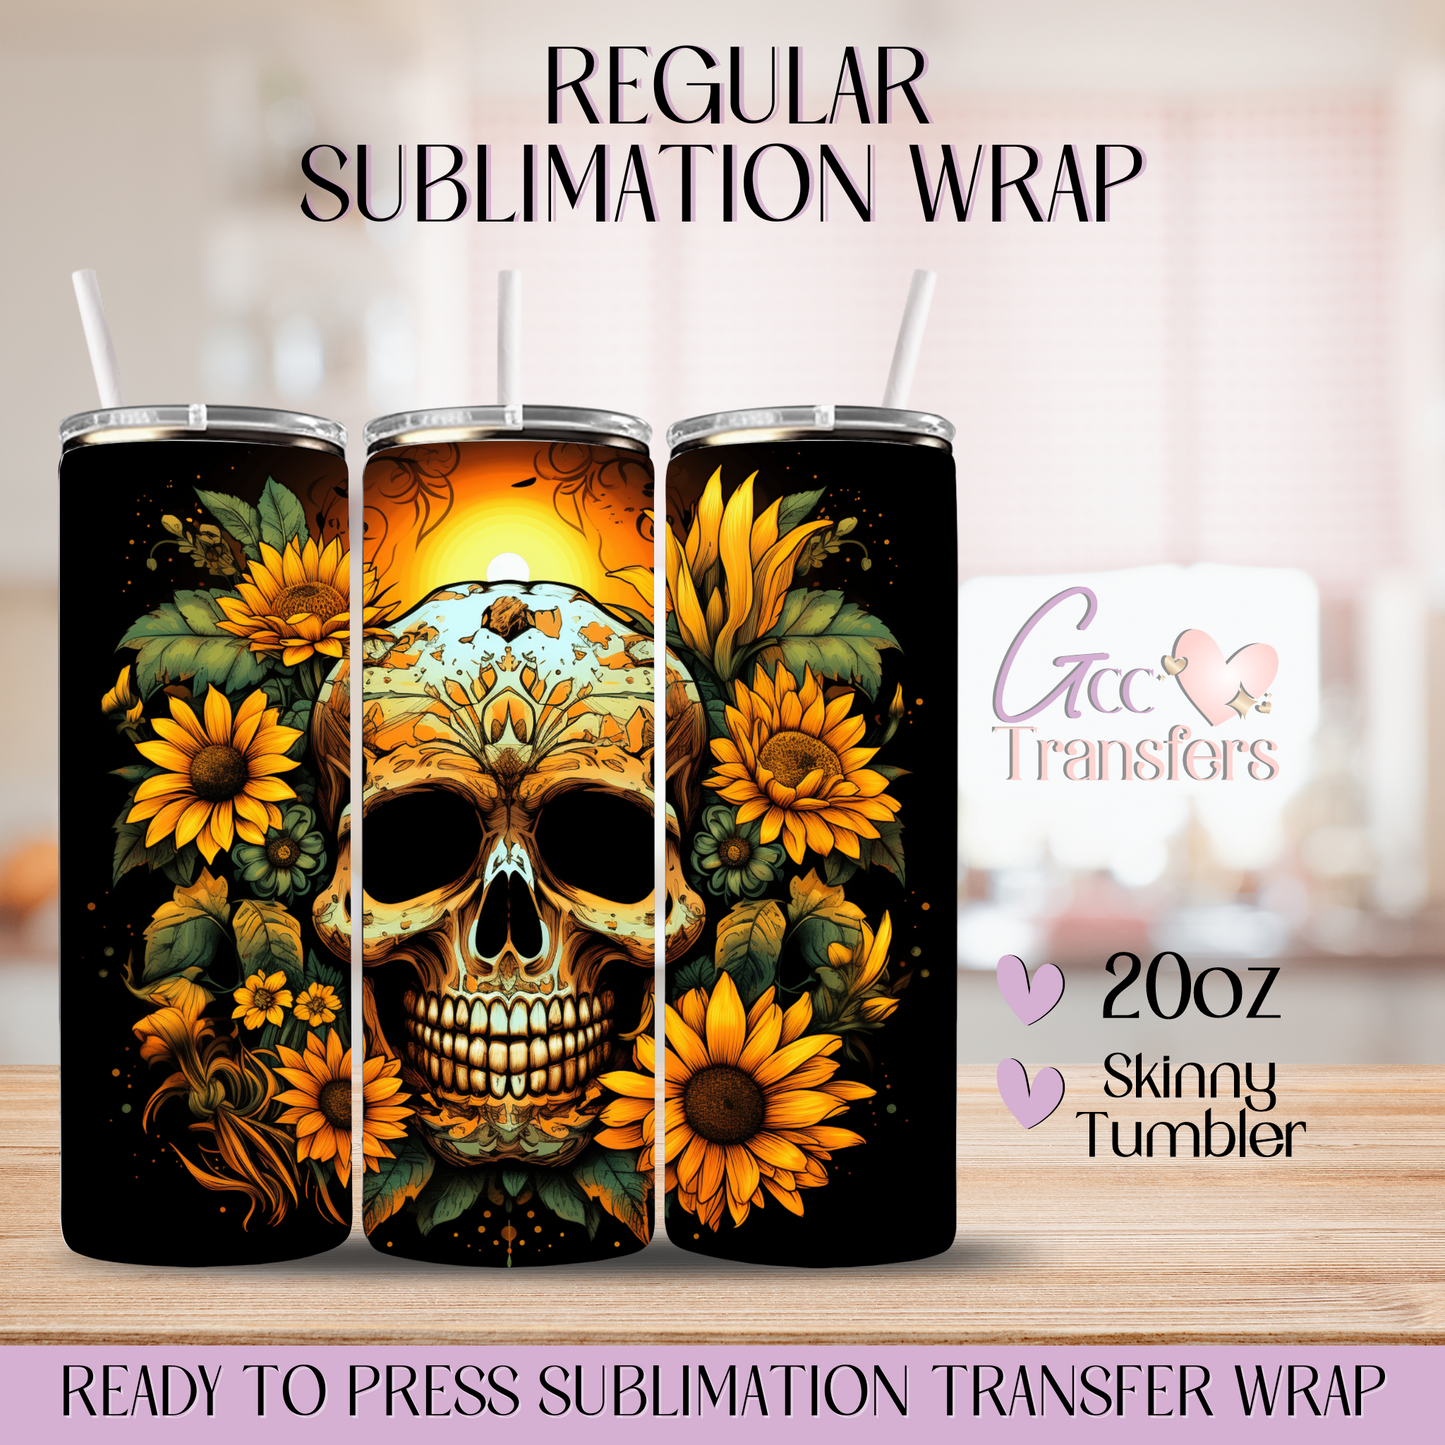 Sunflower Skull - 20oz Regular Sublimation Wrap